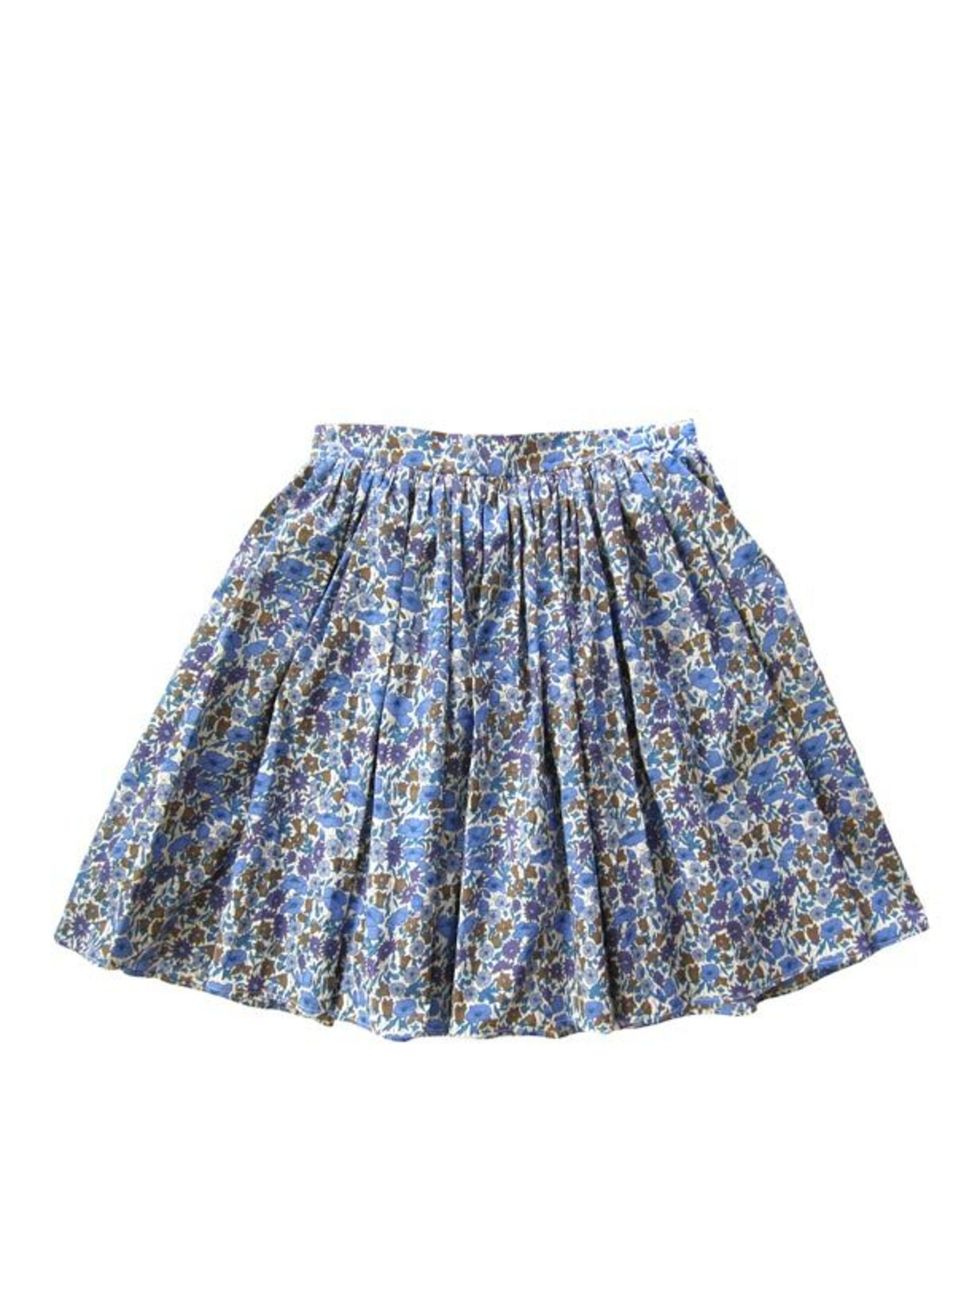 <p>High waisted Liberty print skirt, £90, by <a href="http://www.nadinoo.com/product/lulas-trirly-skirt">Nadinoo</a></p>